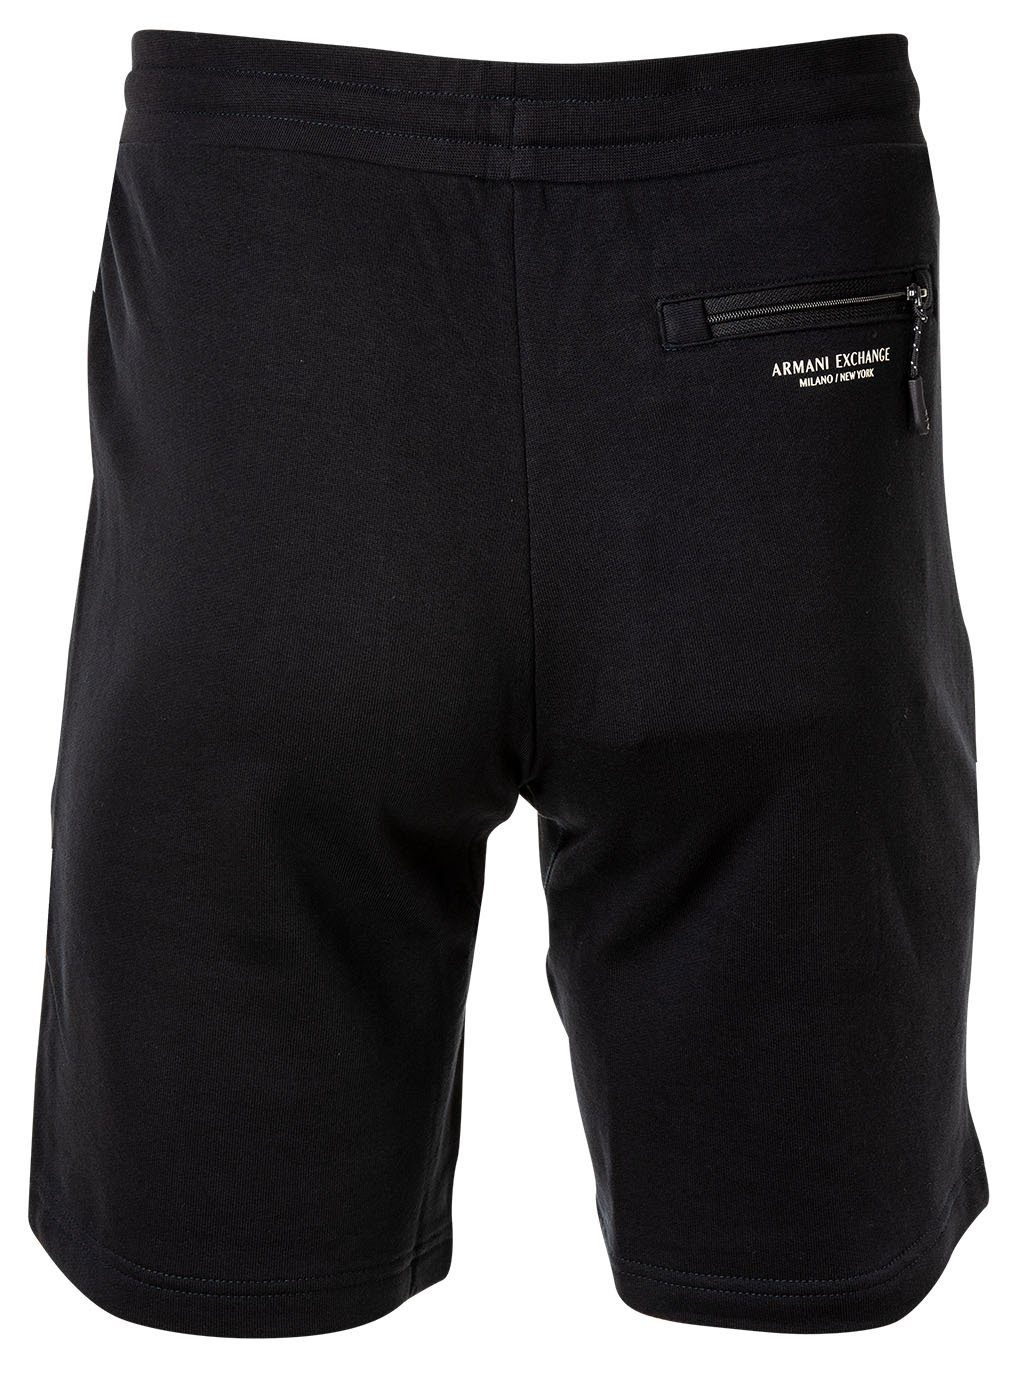 ARMANI EXCHANGE Sweatshorts Herren Jogginghose kurz Marine - Pants, Loungewear